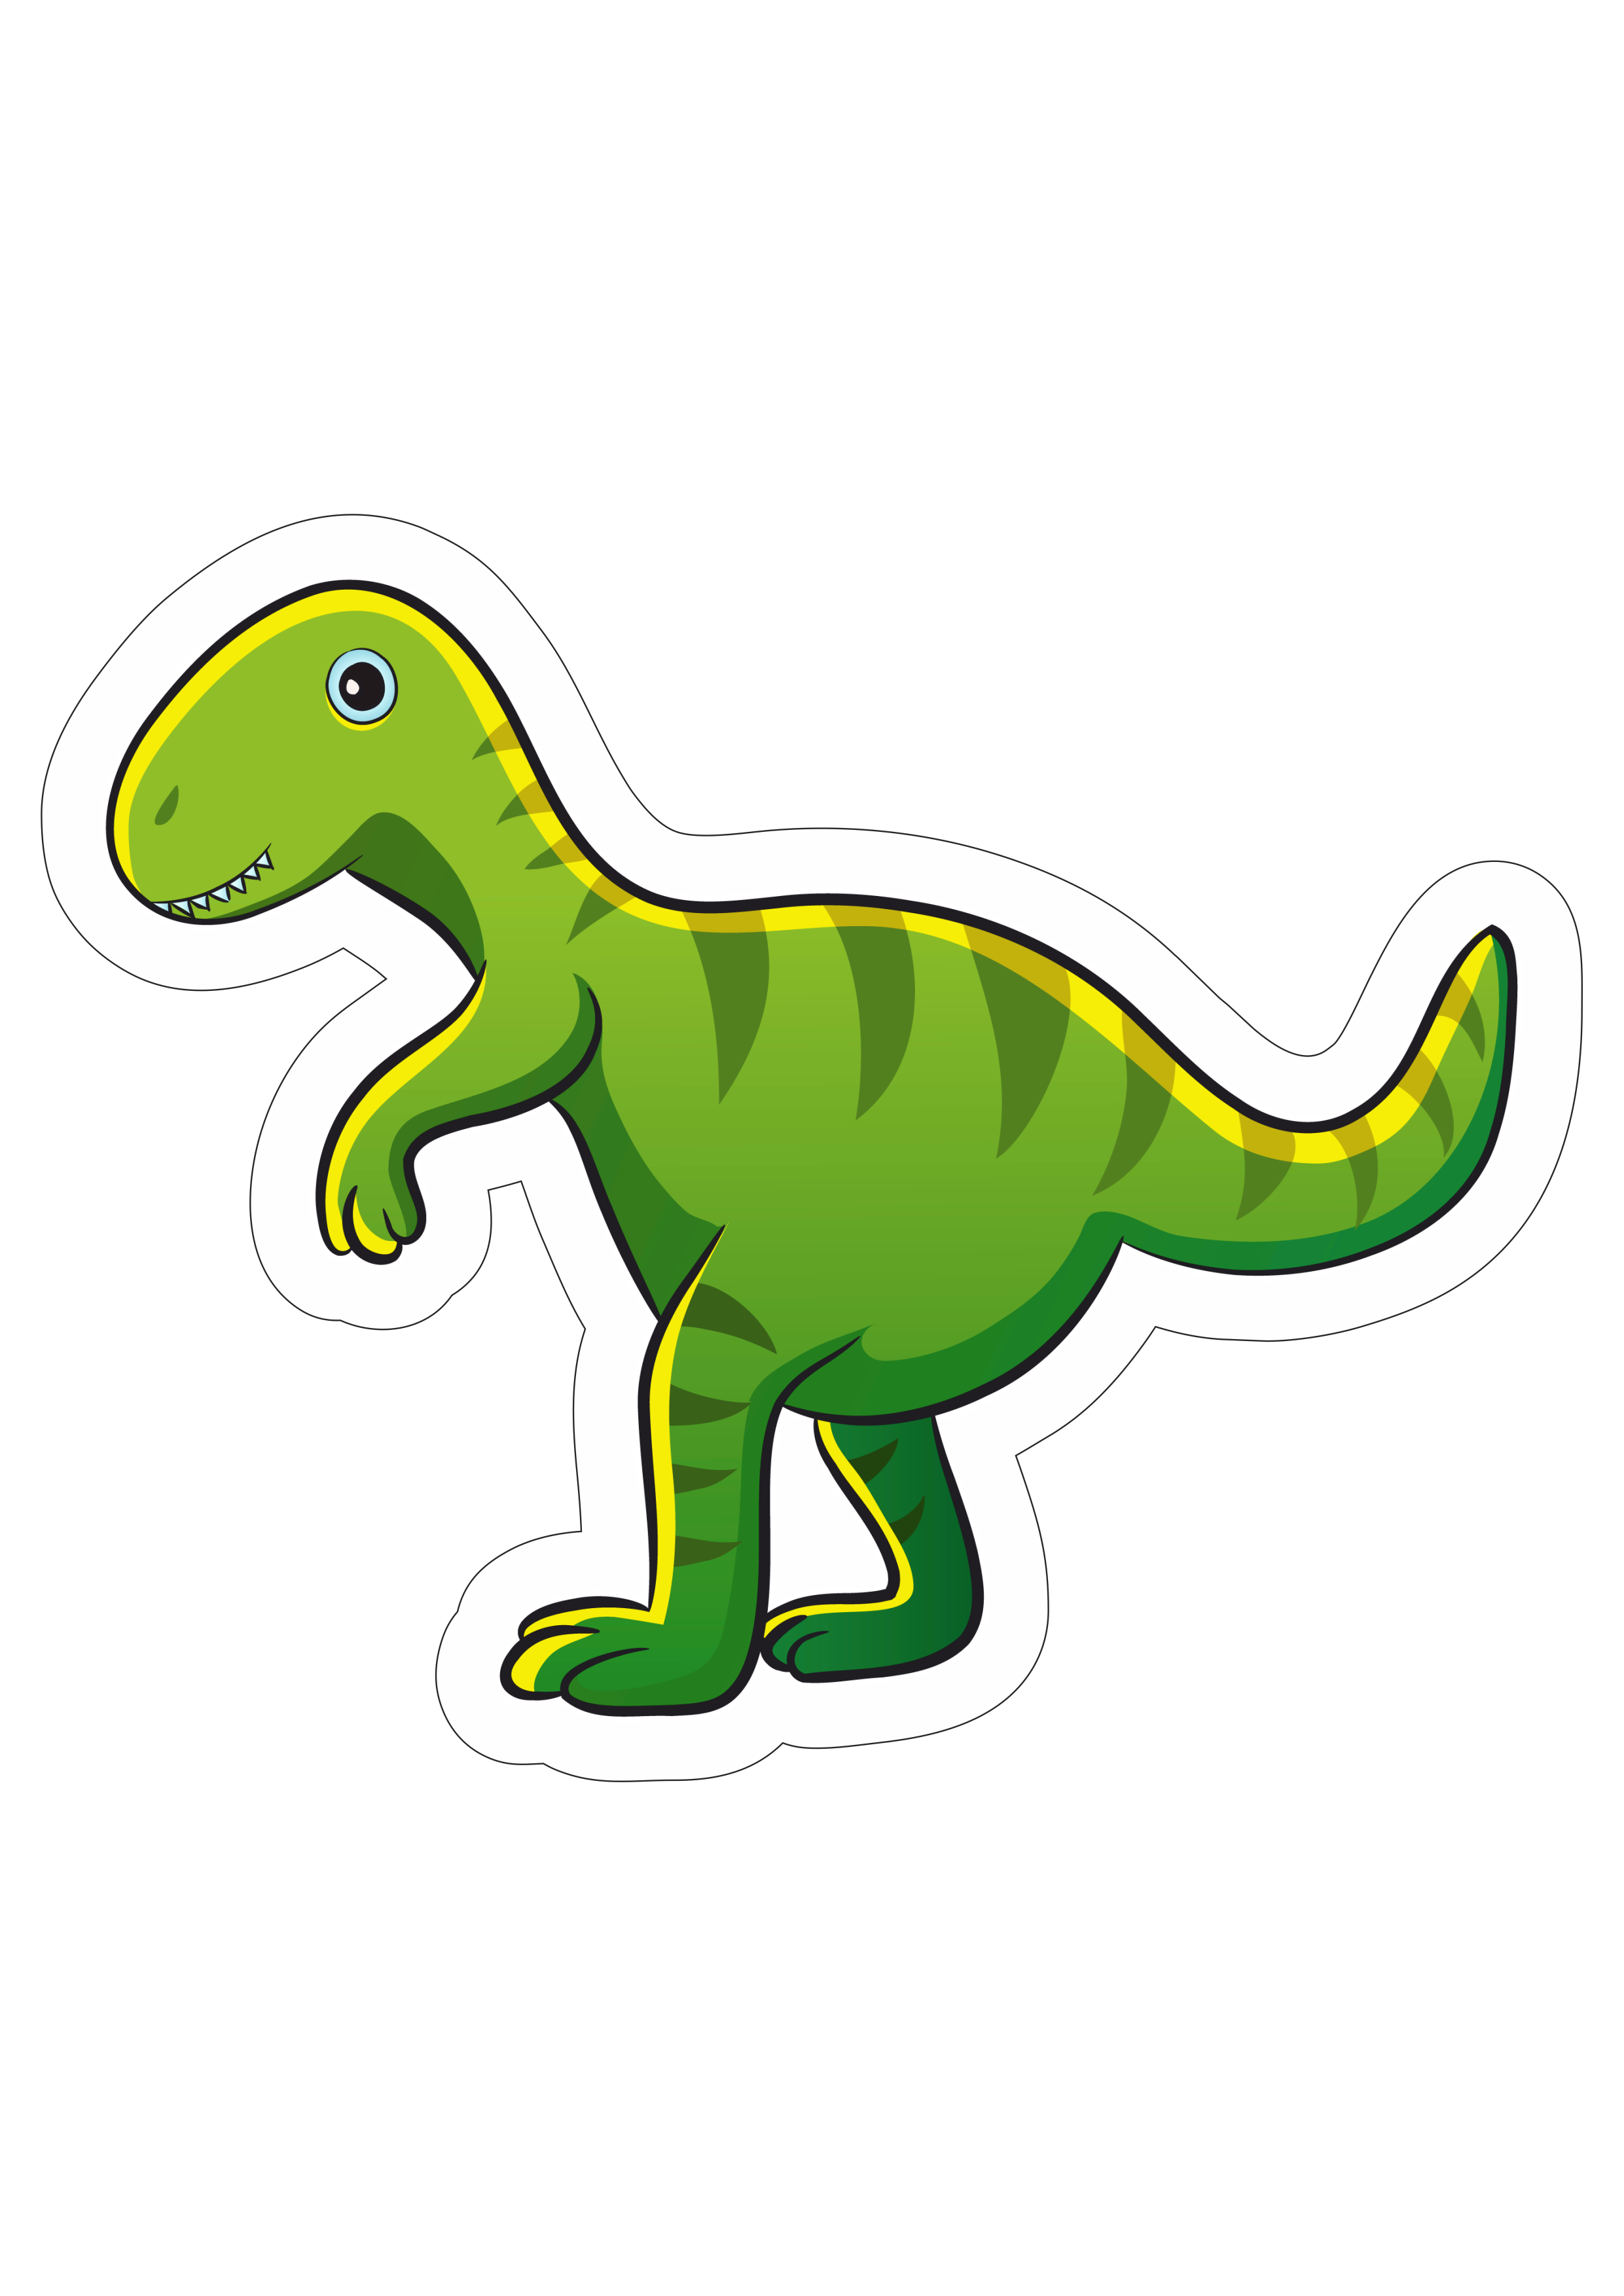 Baby Dinossauro tiranossauro rex verde ilustration cute fofinho png